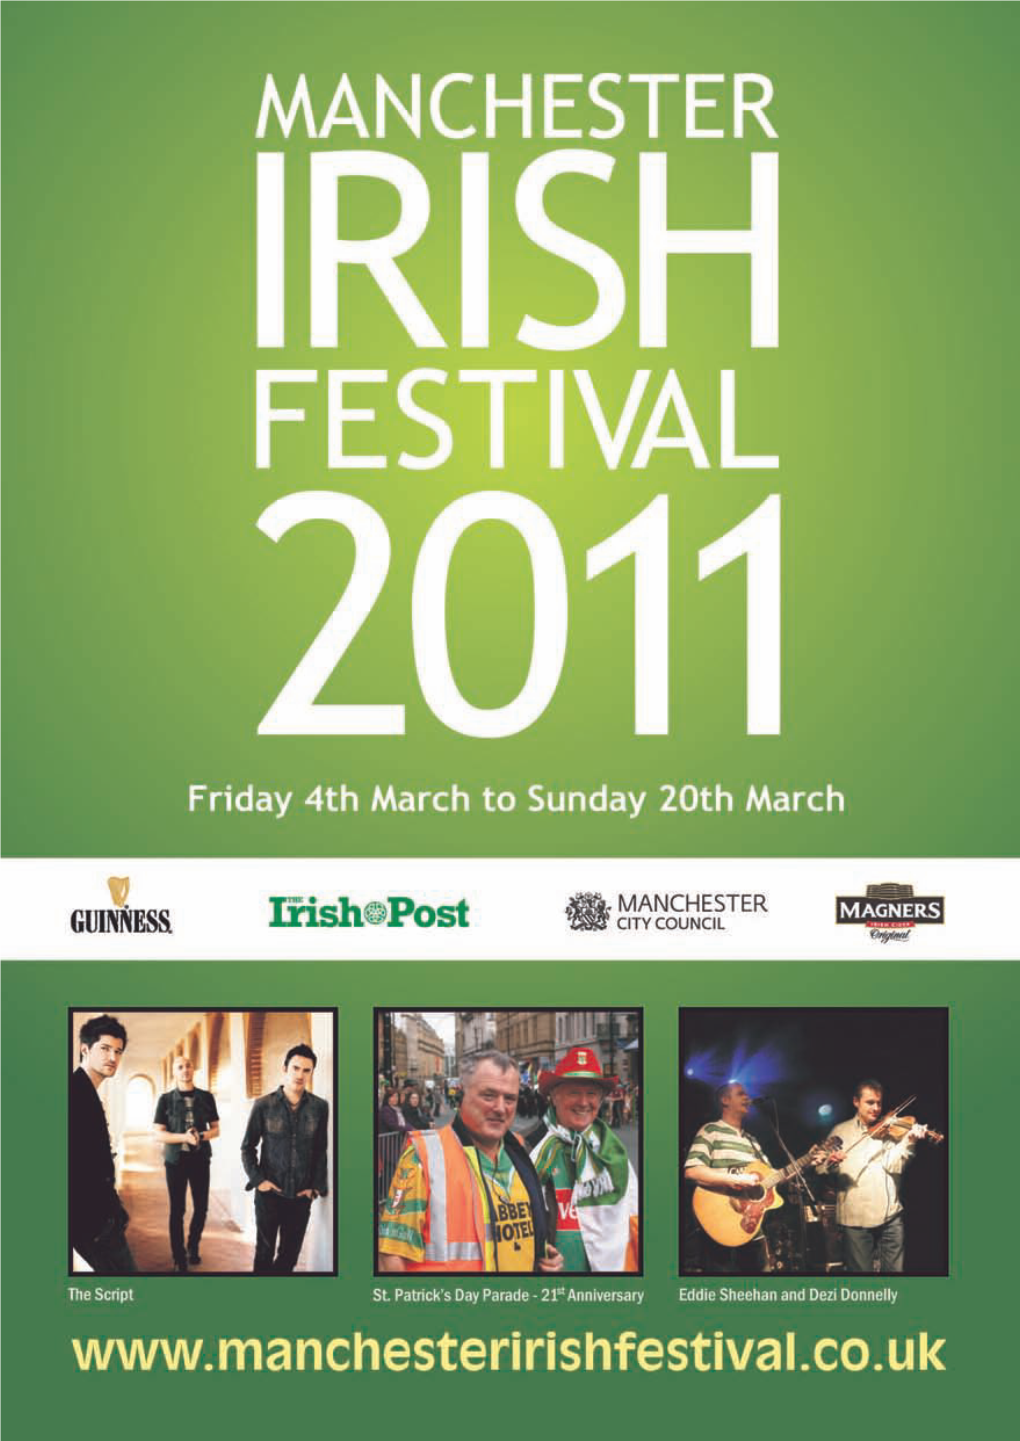 Manchester Irish Festival 2011:Layout 1 08/02/2011 12:59 Page 1